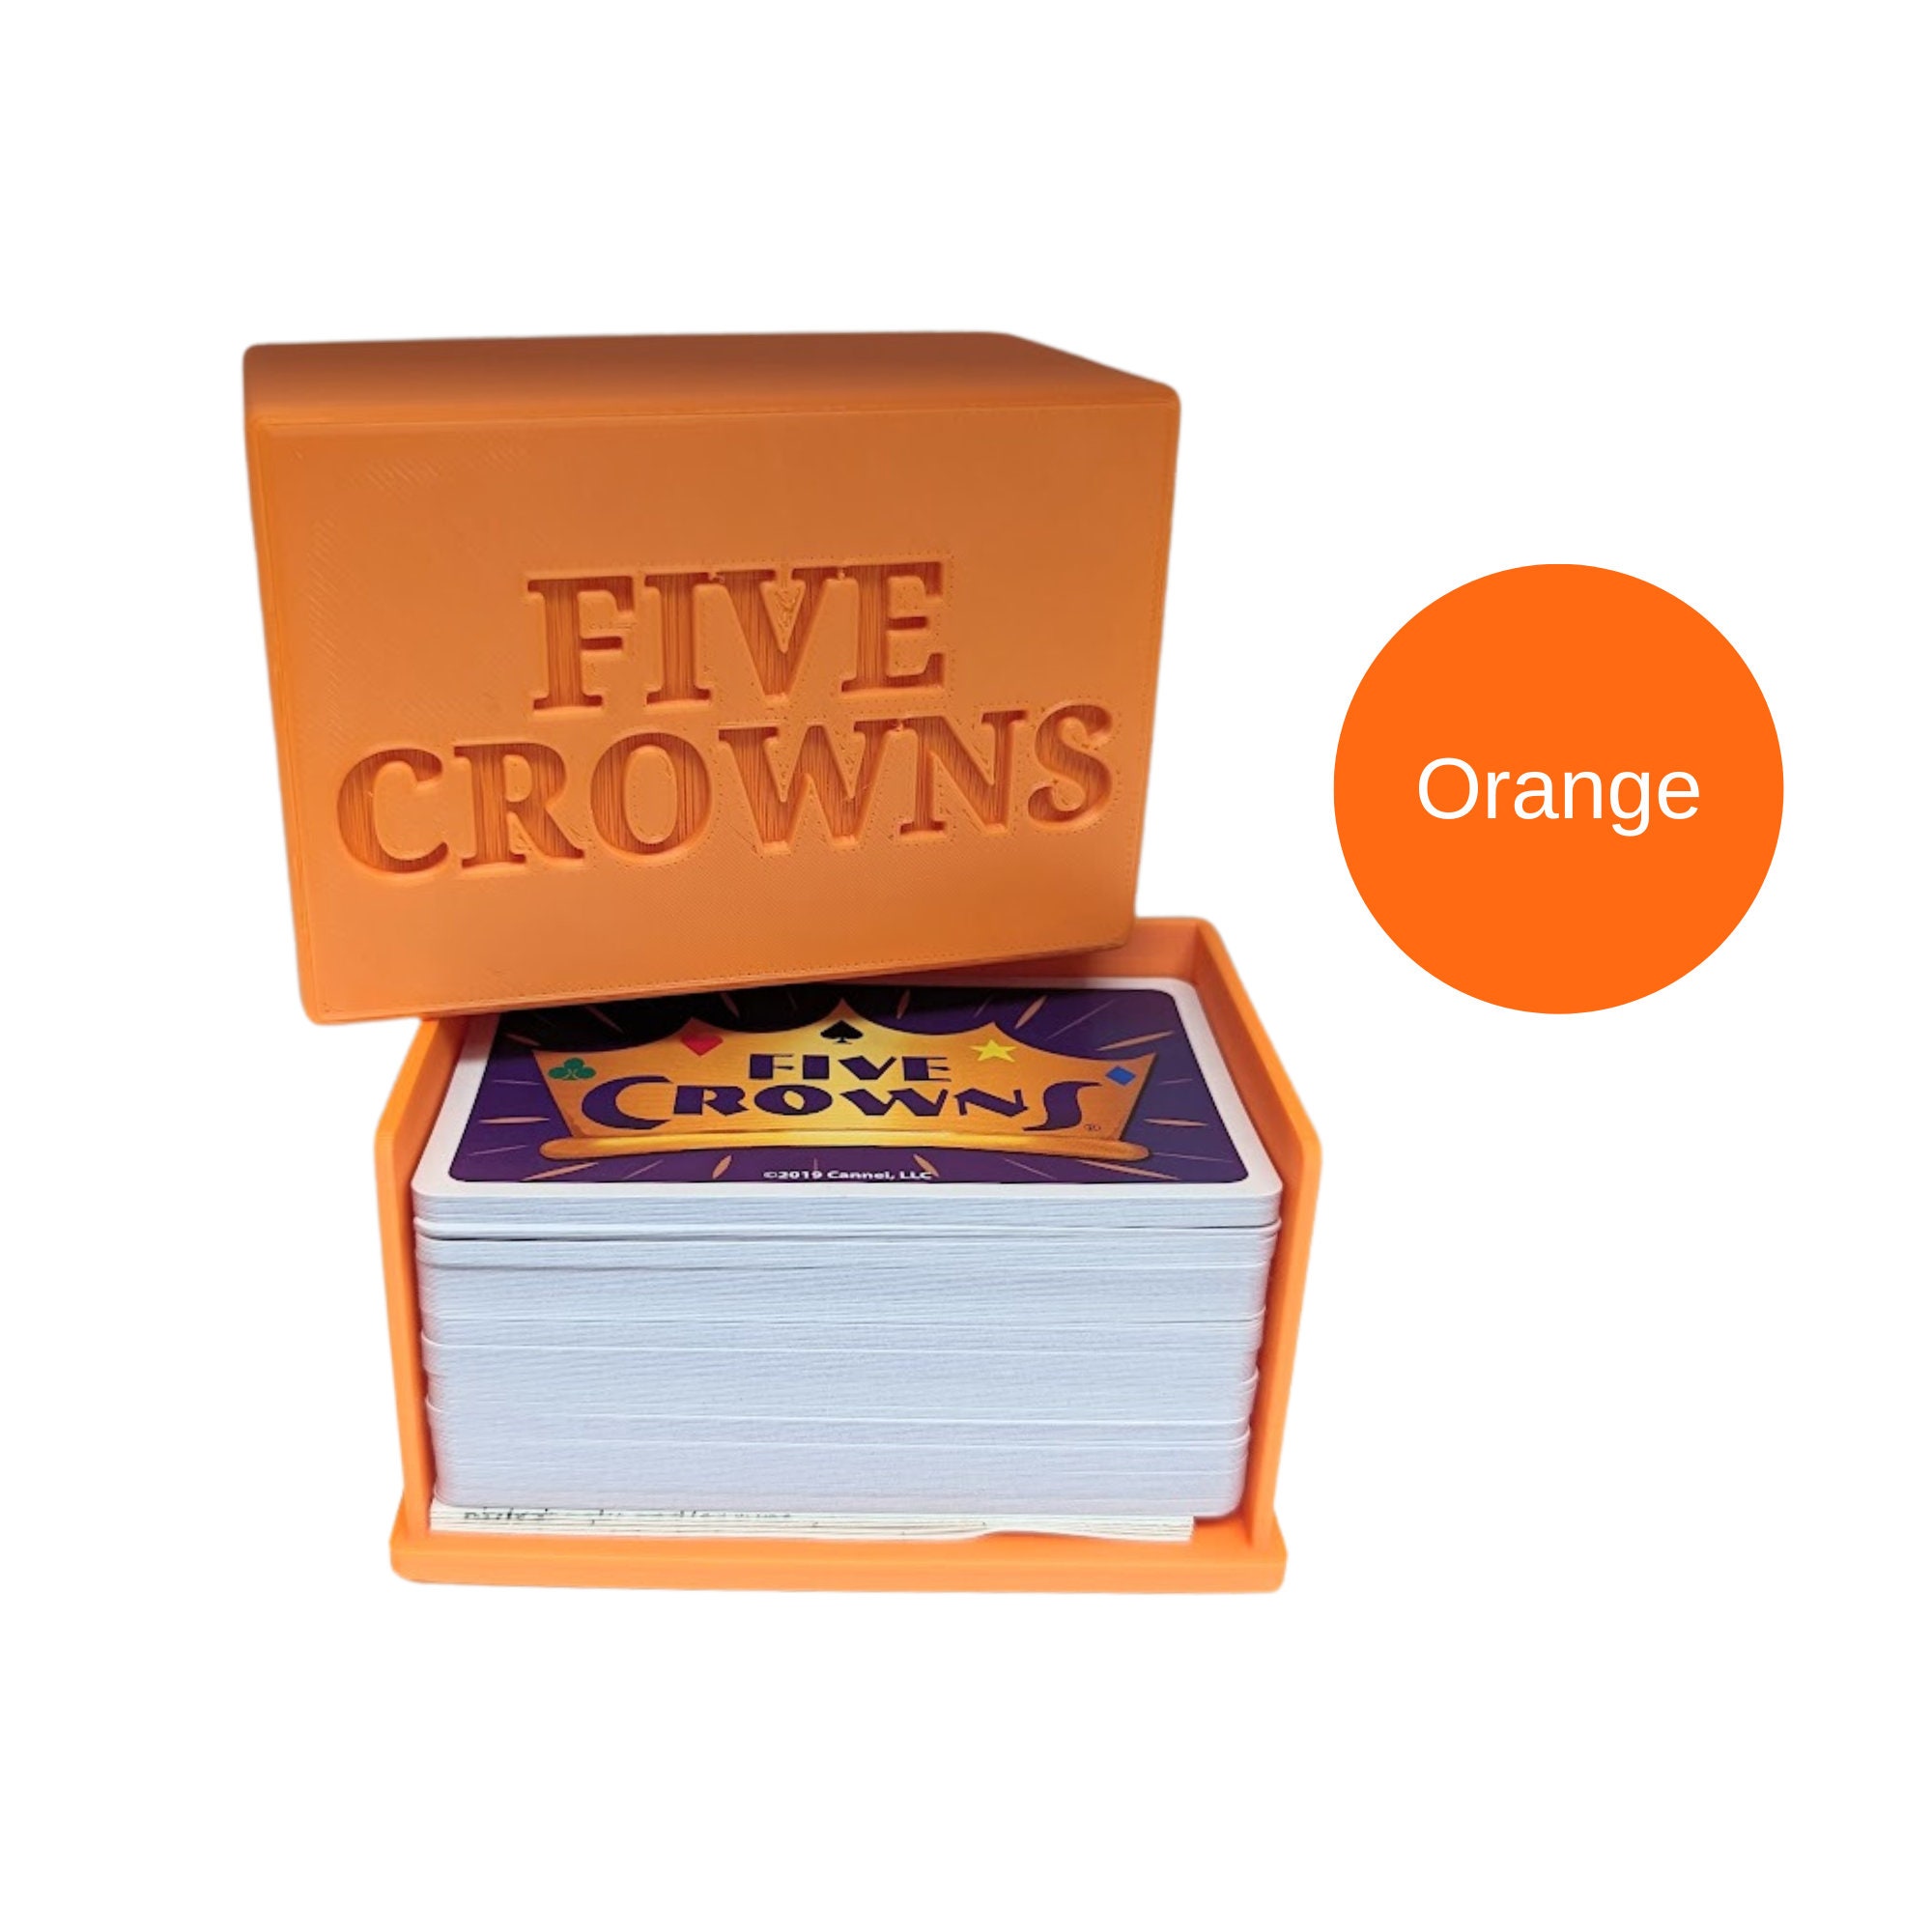 Five Crowns Deck Box by secv